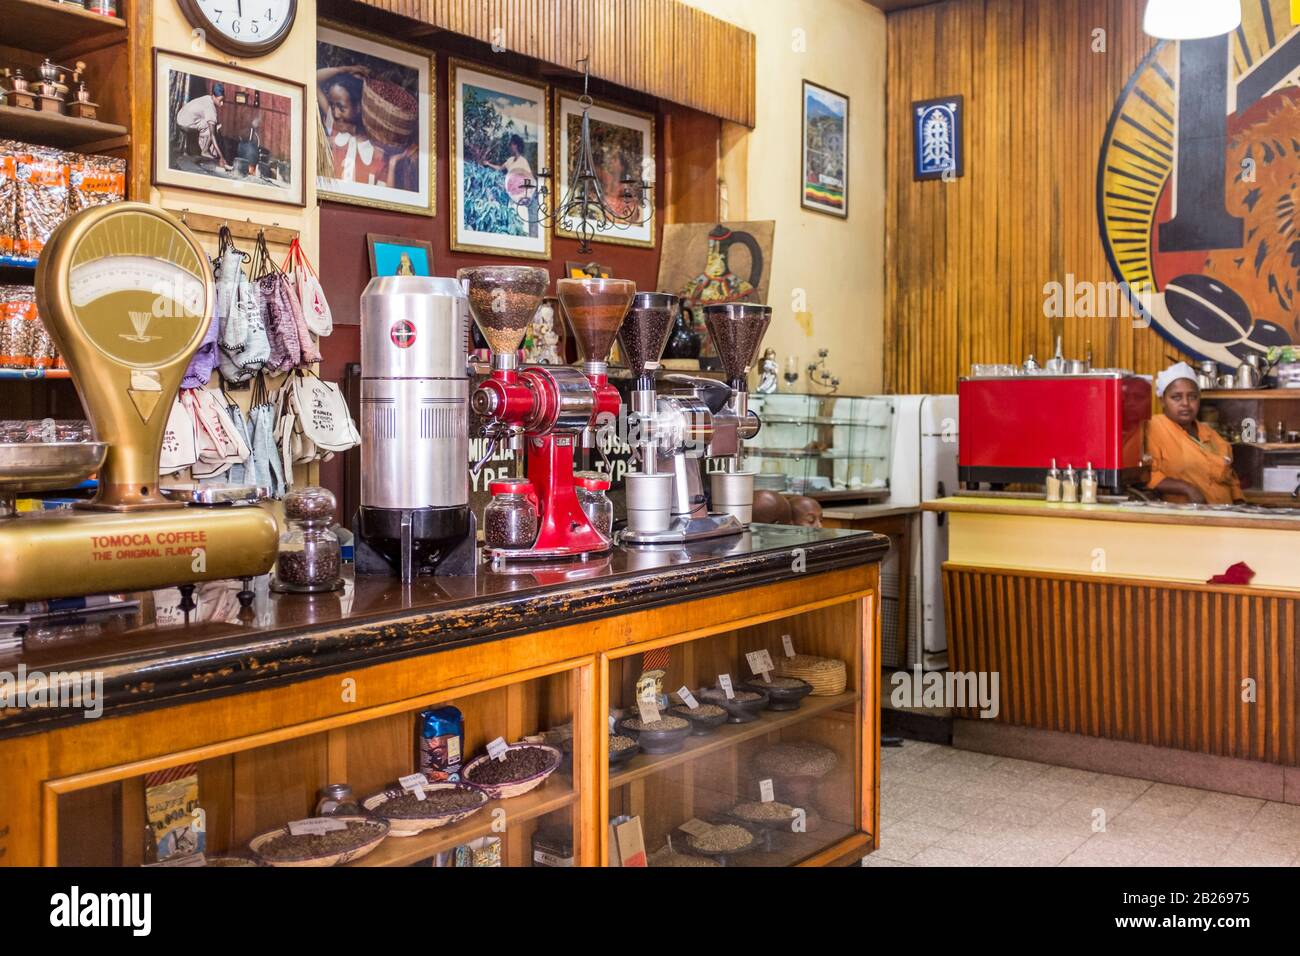 Tomoca cafe in Addis Ababa, Ethiopia Stock Photo - Alamy